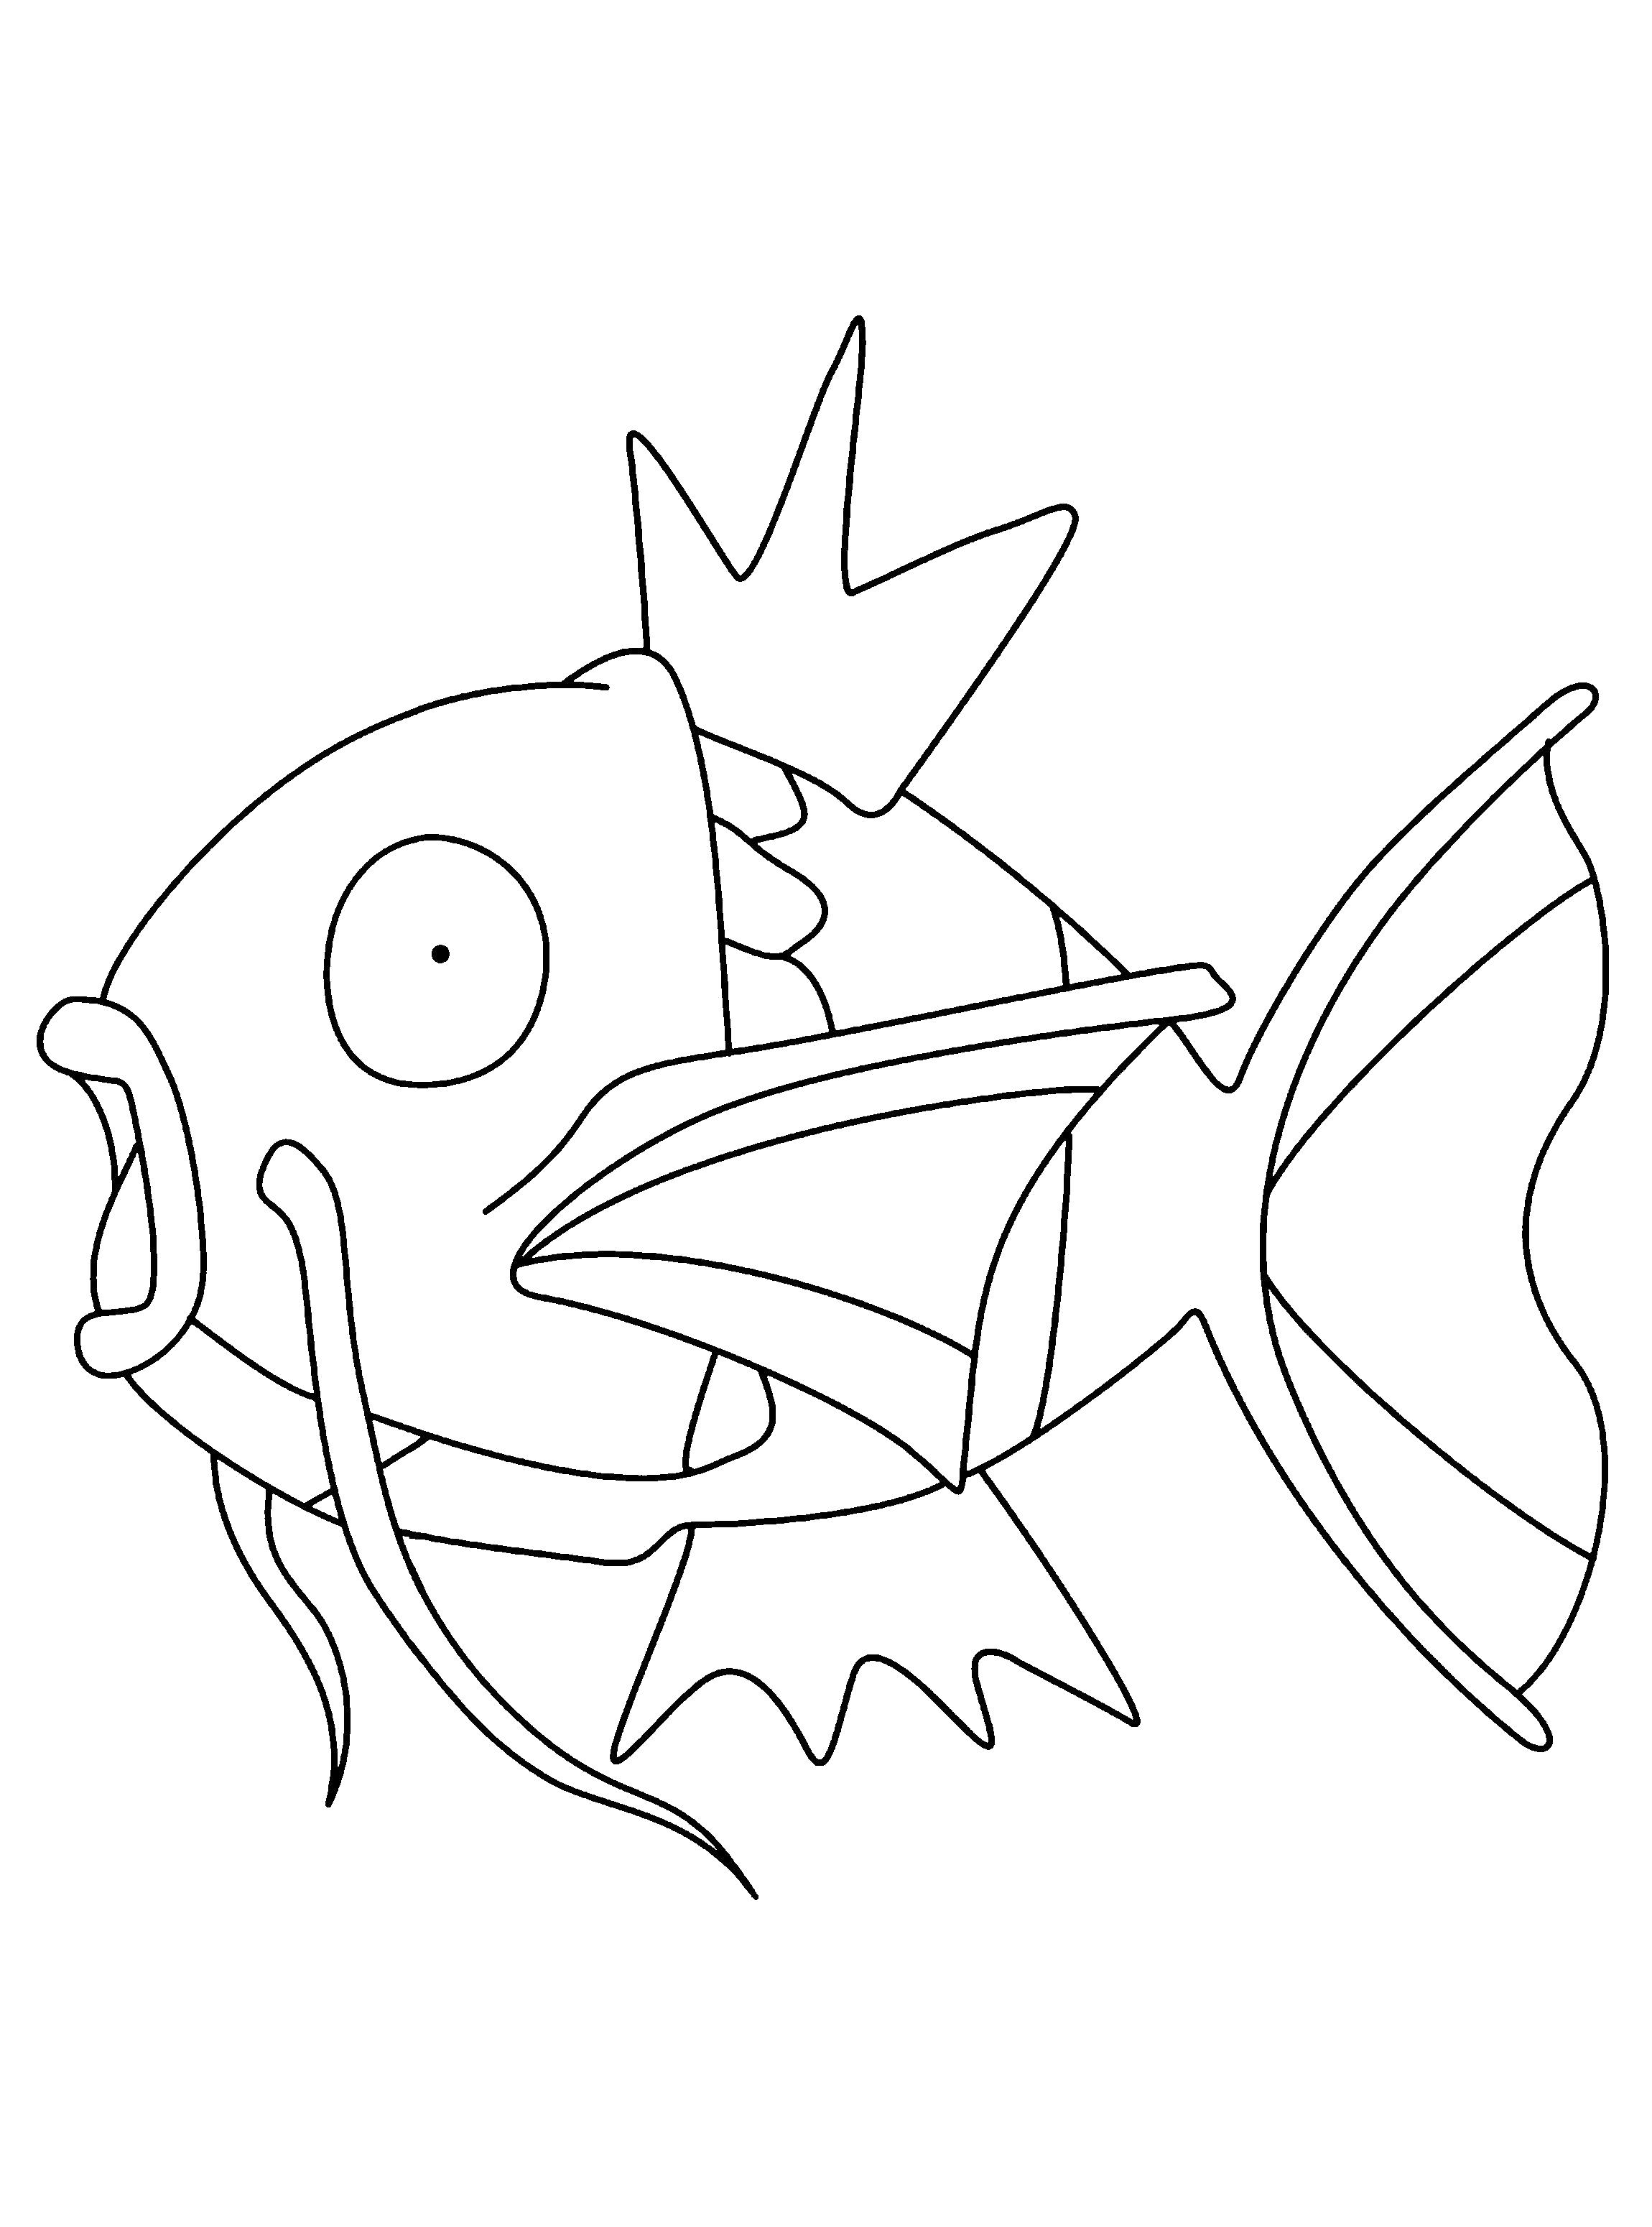 Название: Раскраска Рыбка. Категория: покемон. Теги: покемон.